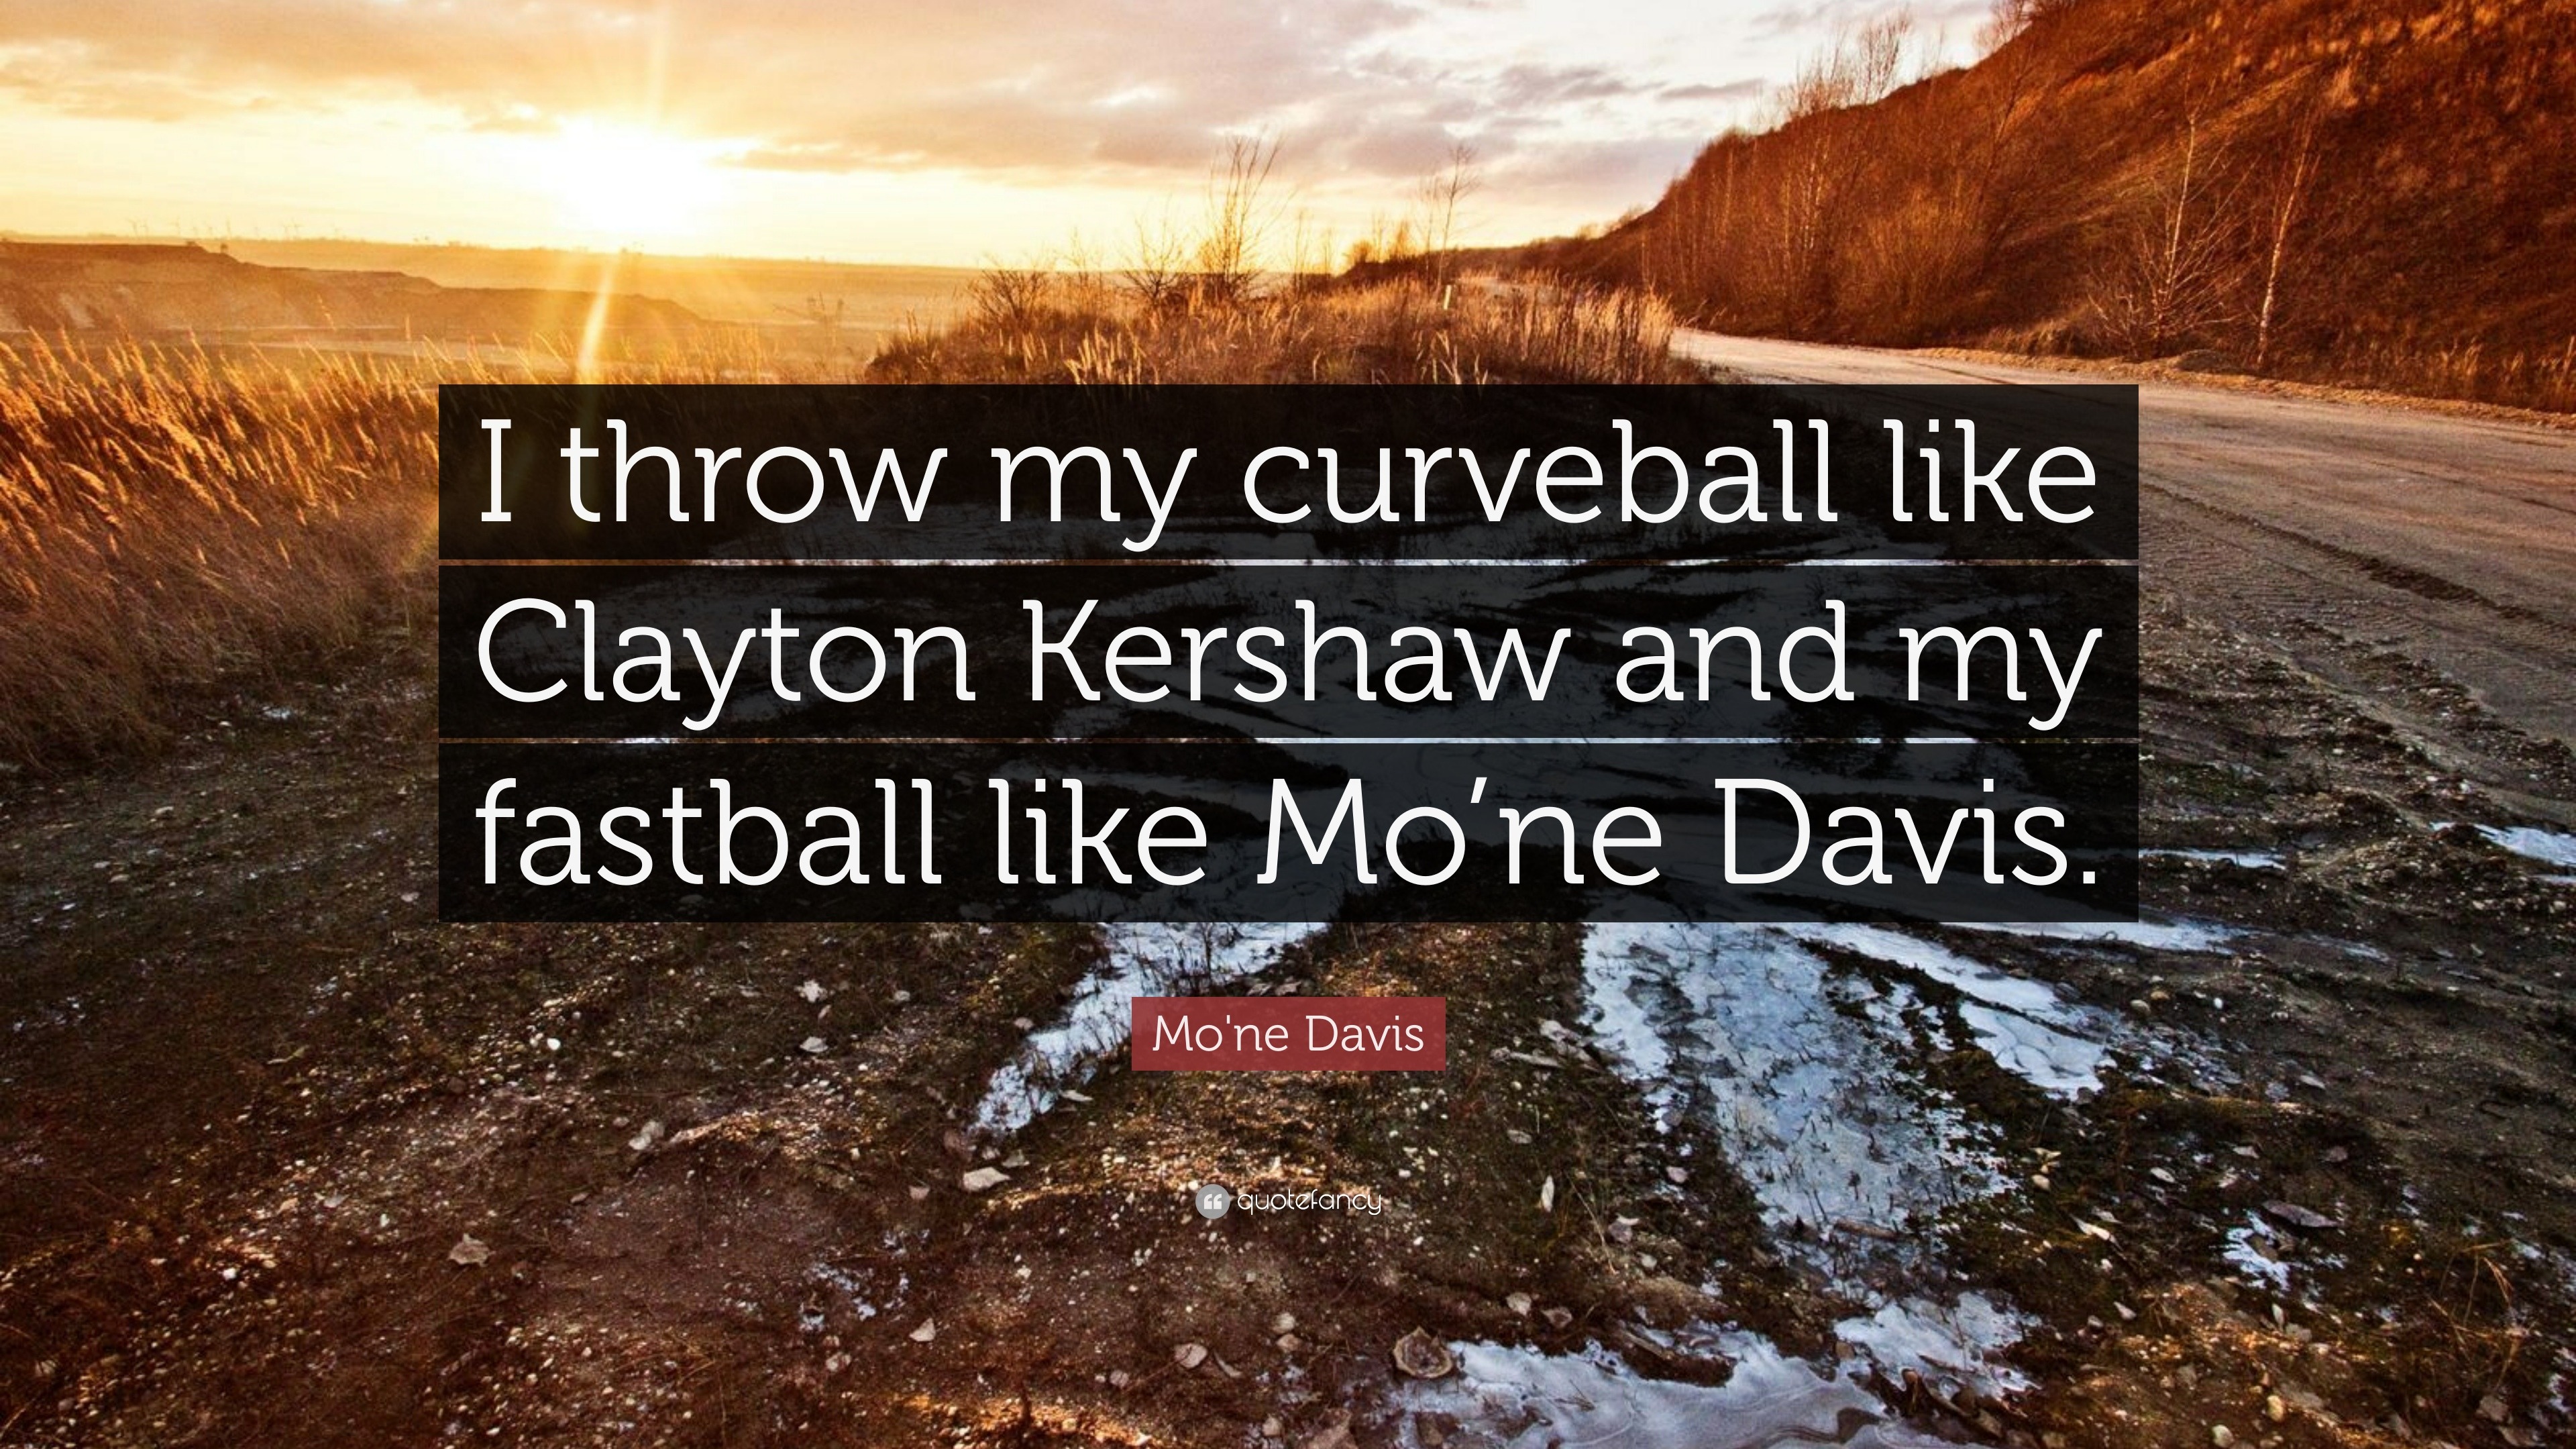 Mo'ne Davis Quote: “I throw my curveball like Clayton Kershaw and